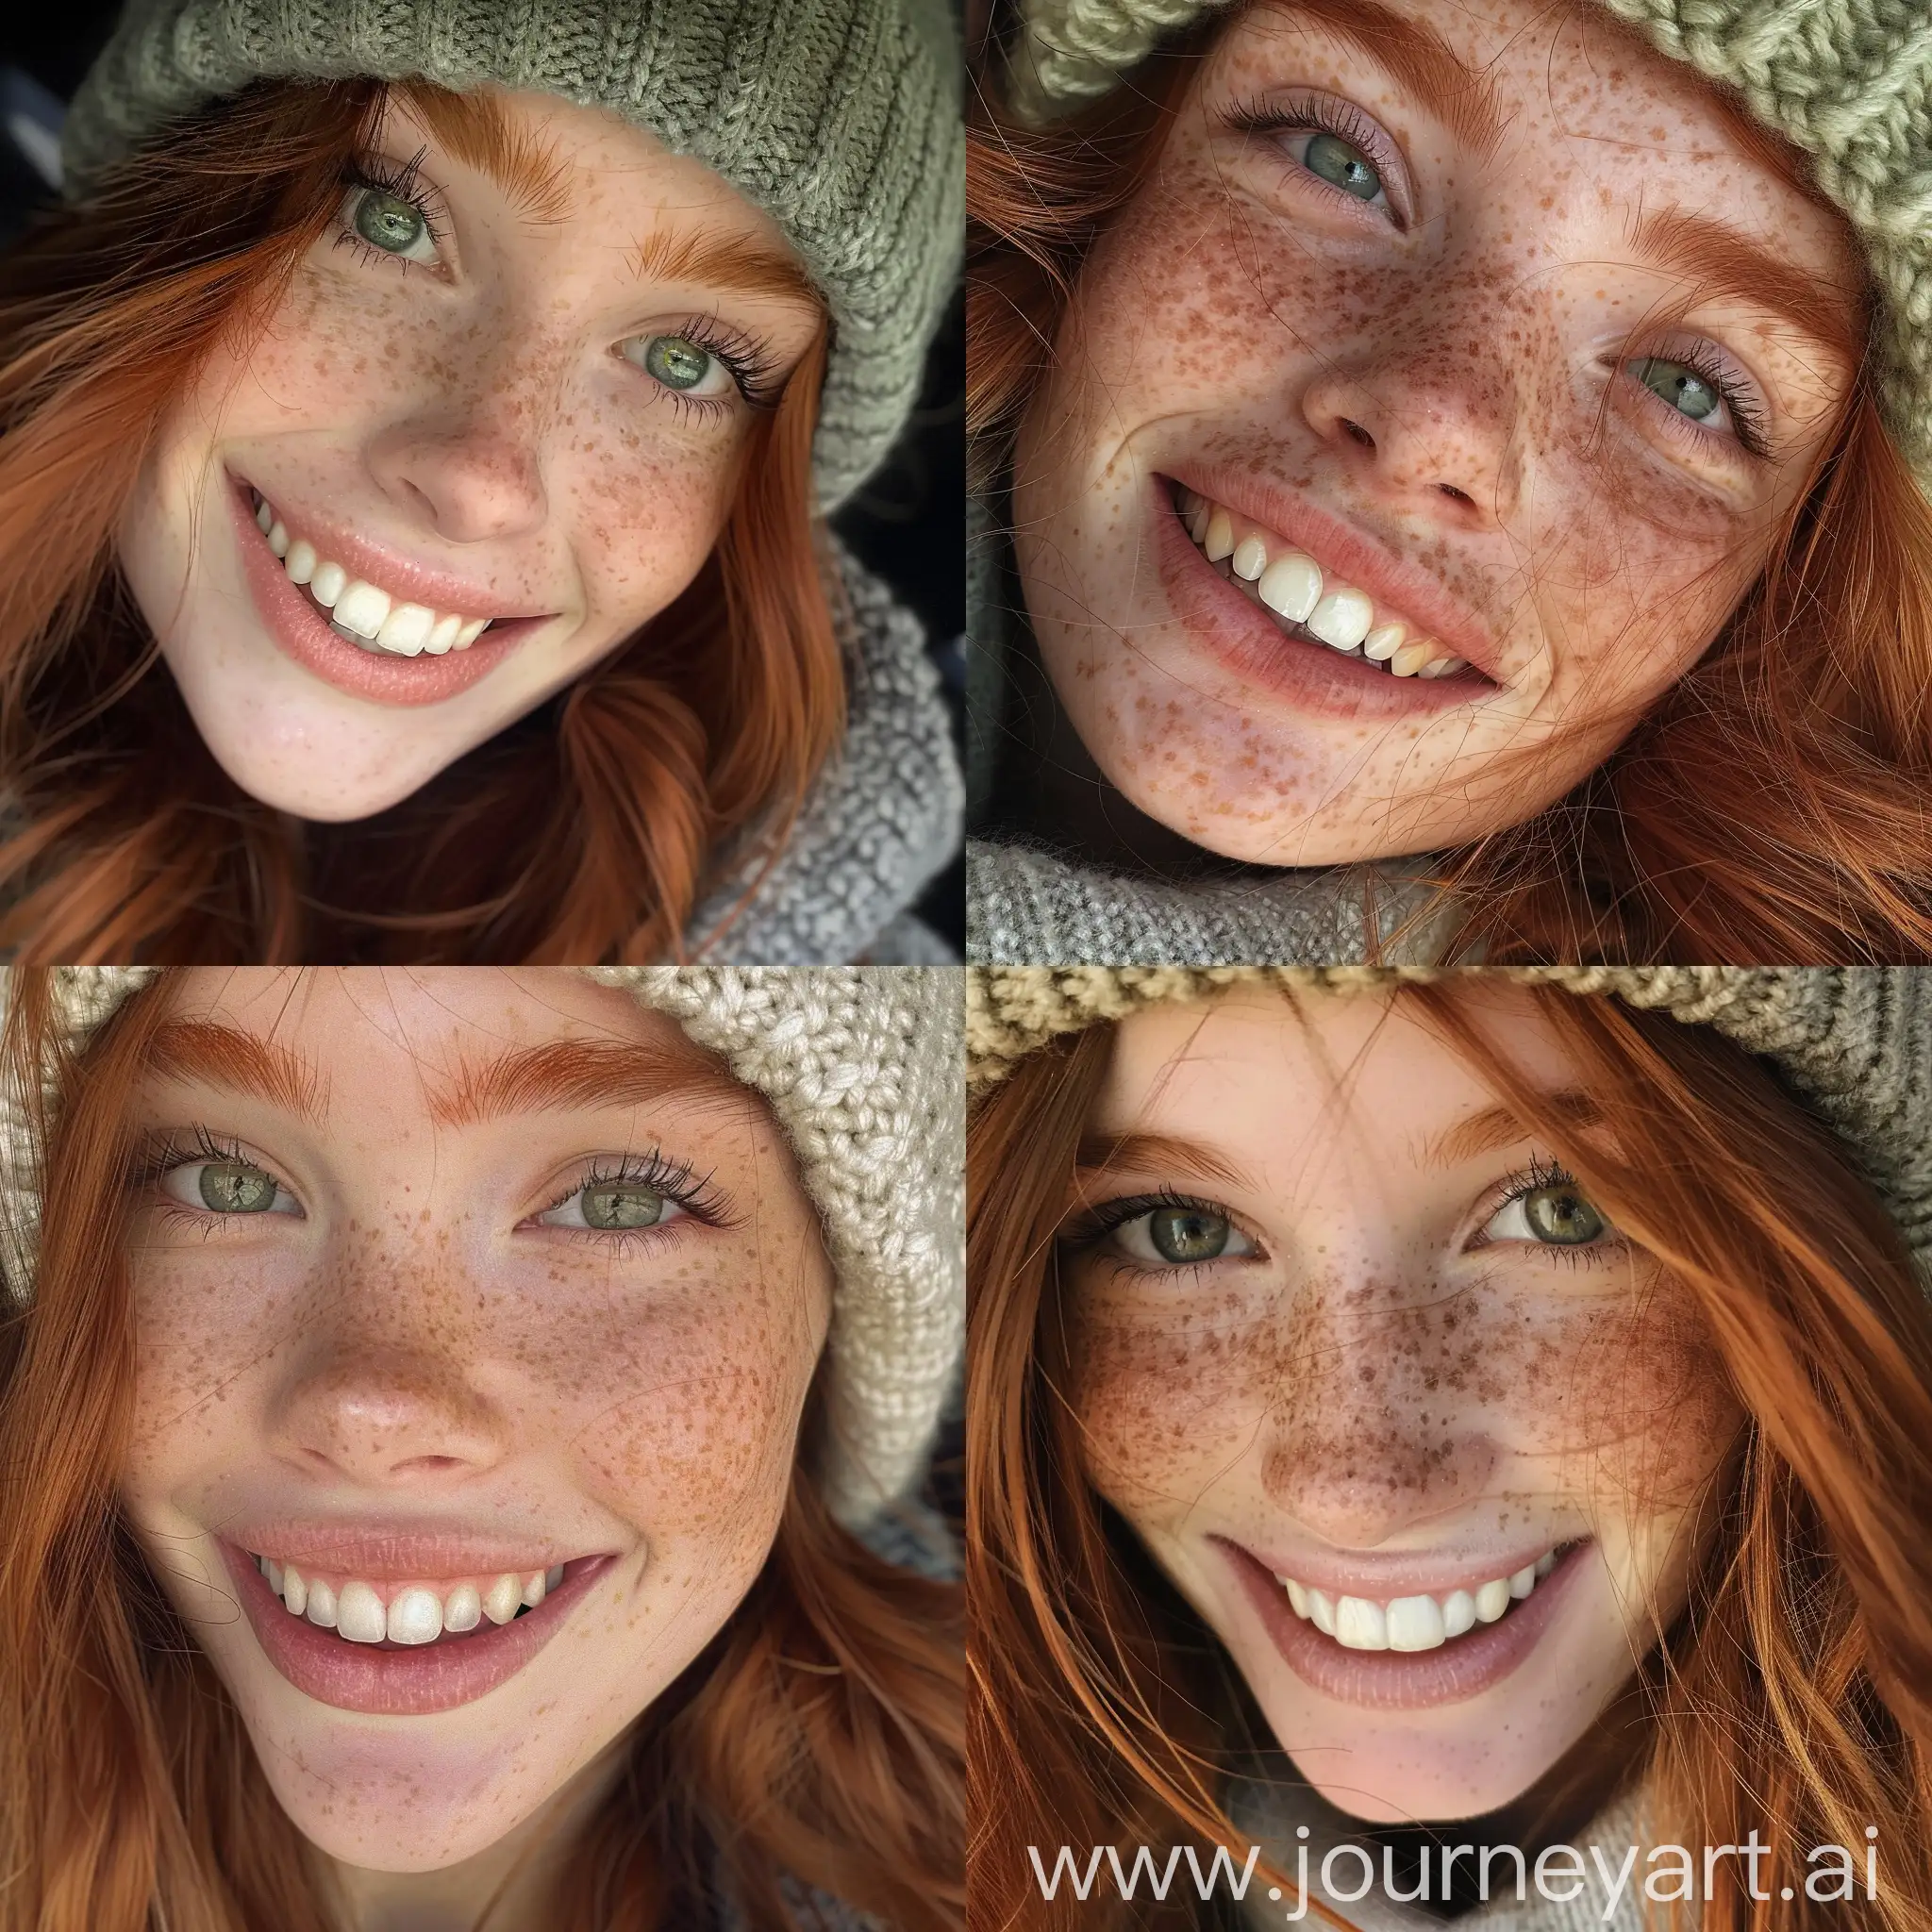 Aesthetic instagram close up selfie of a redhead top model teenage girl, freckles, beanie, smiling brightly, perfect teeth, green eyes